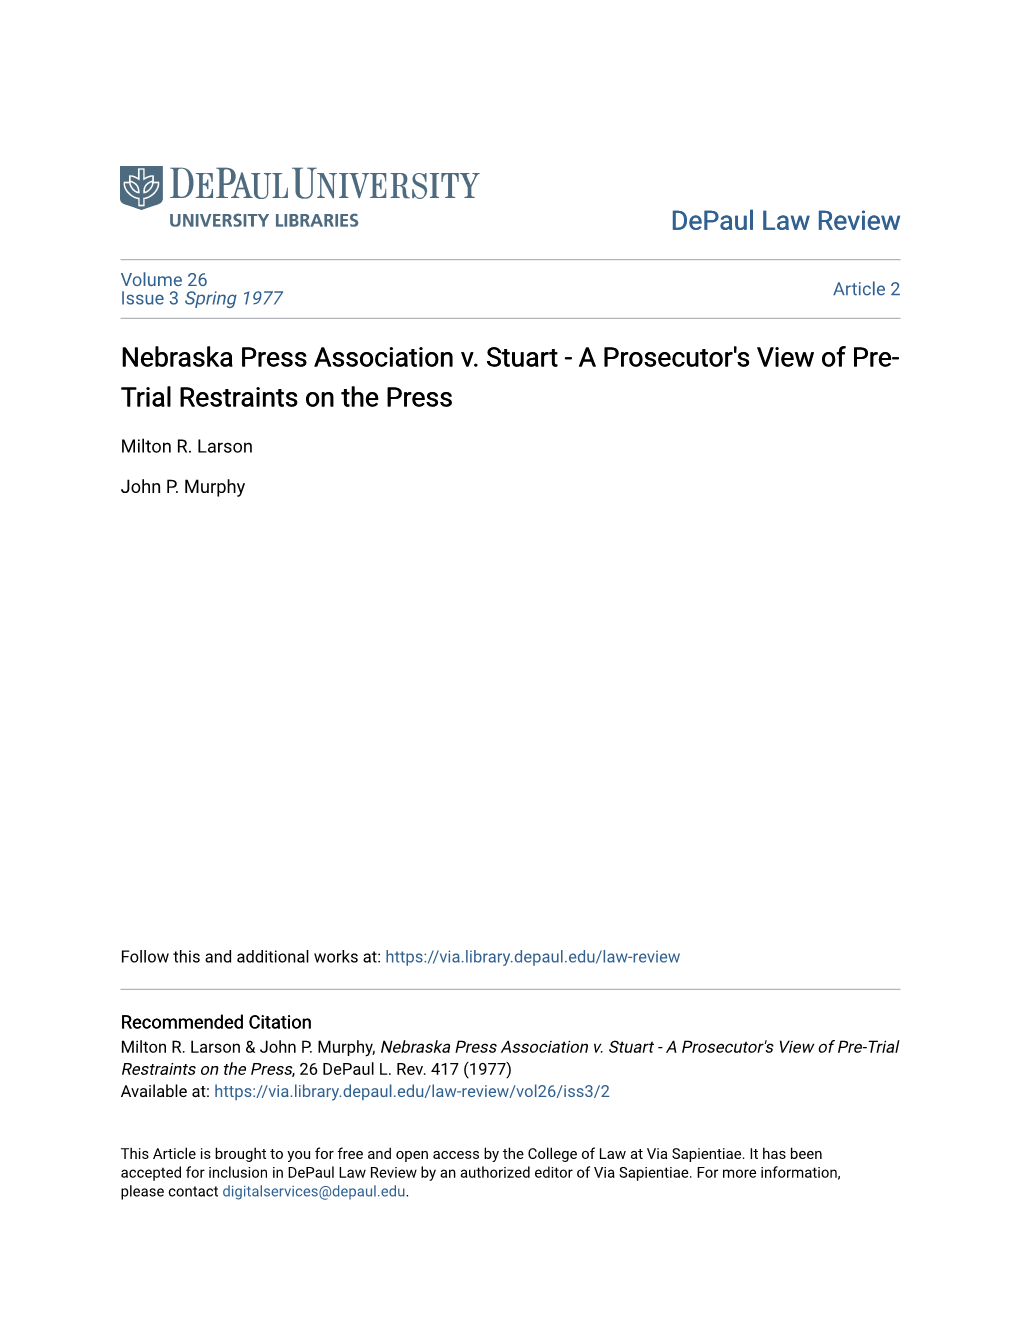 Nebraska Press Association V. Stuart - a Prosecutor's View of Pre- Trial Restraints on the Press